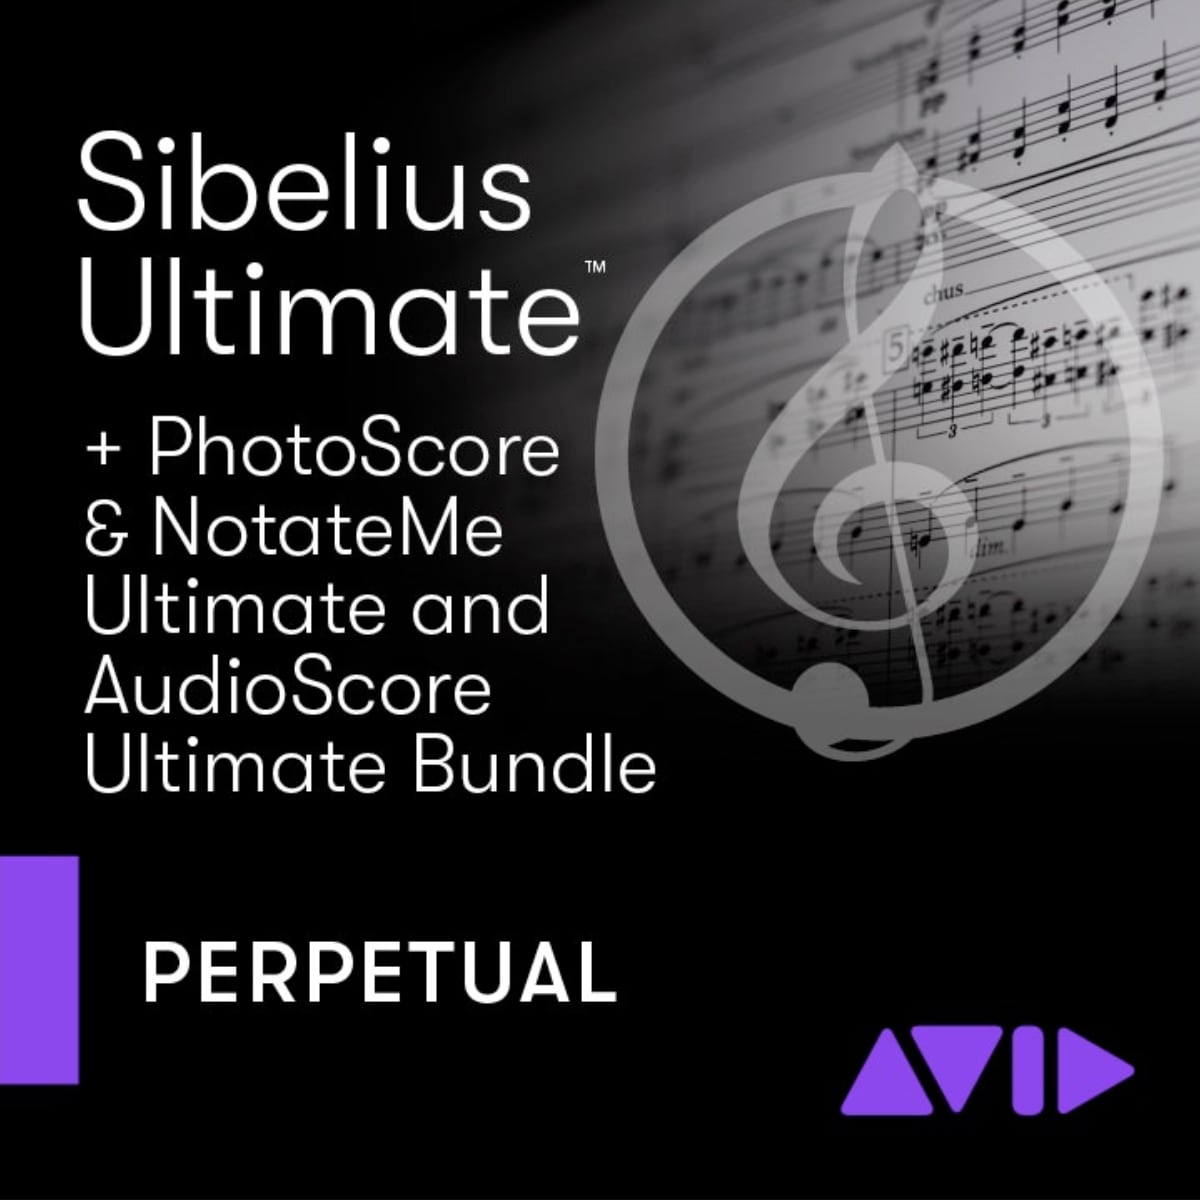 AVID Sibelius | Ultimate Perpetual License NEW + PhotoScore and NotateMe Ultimate + AudioScore Ultimate